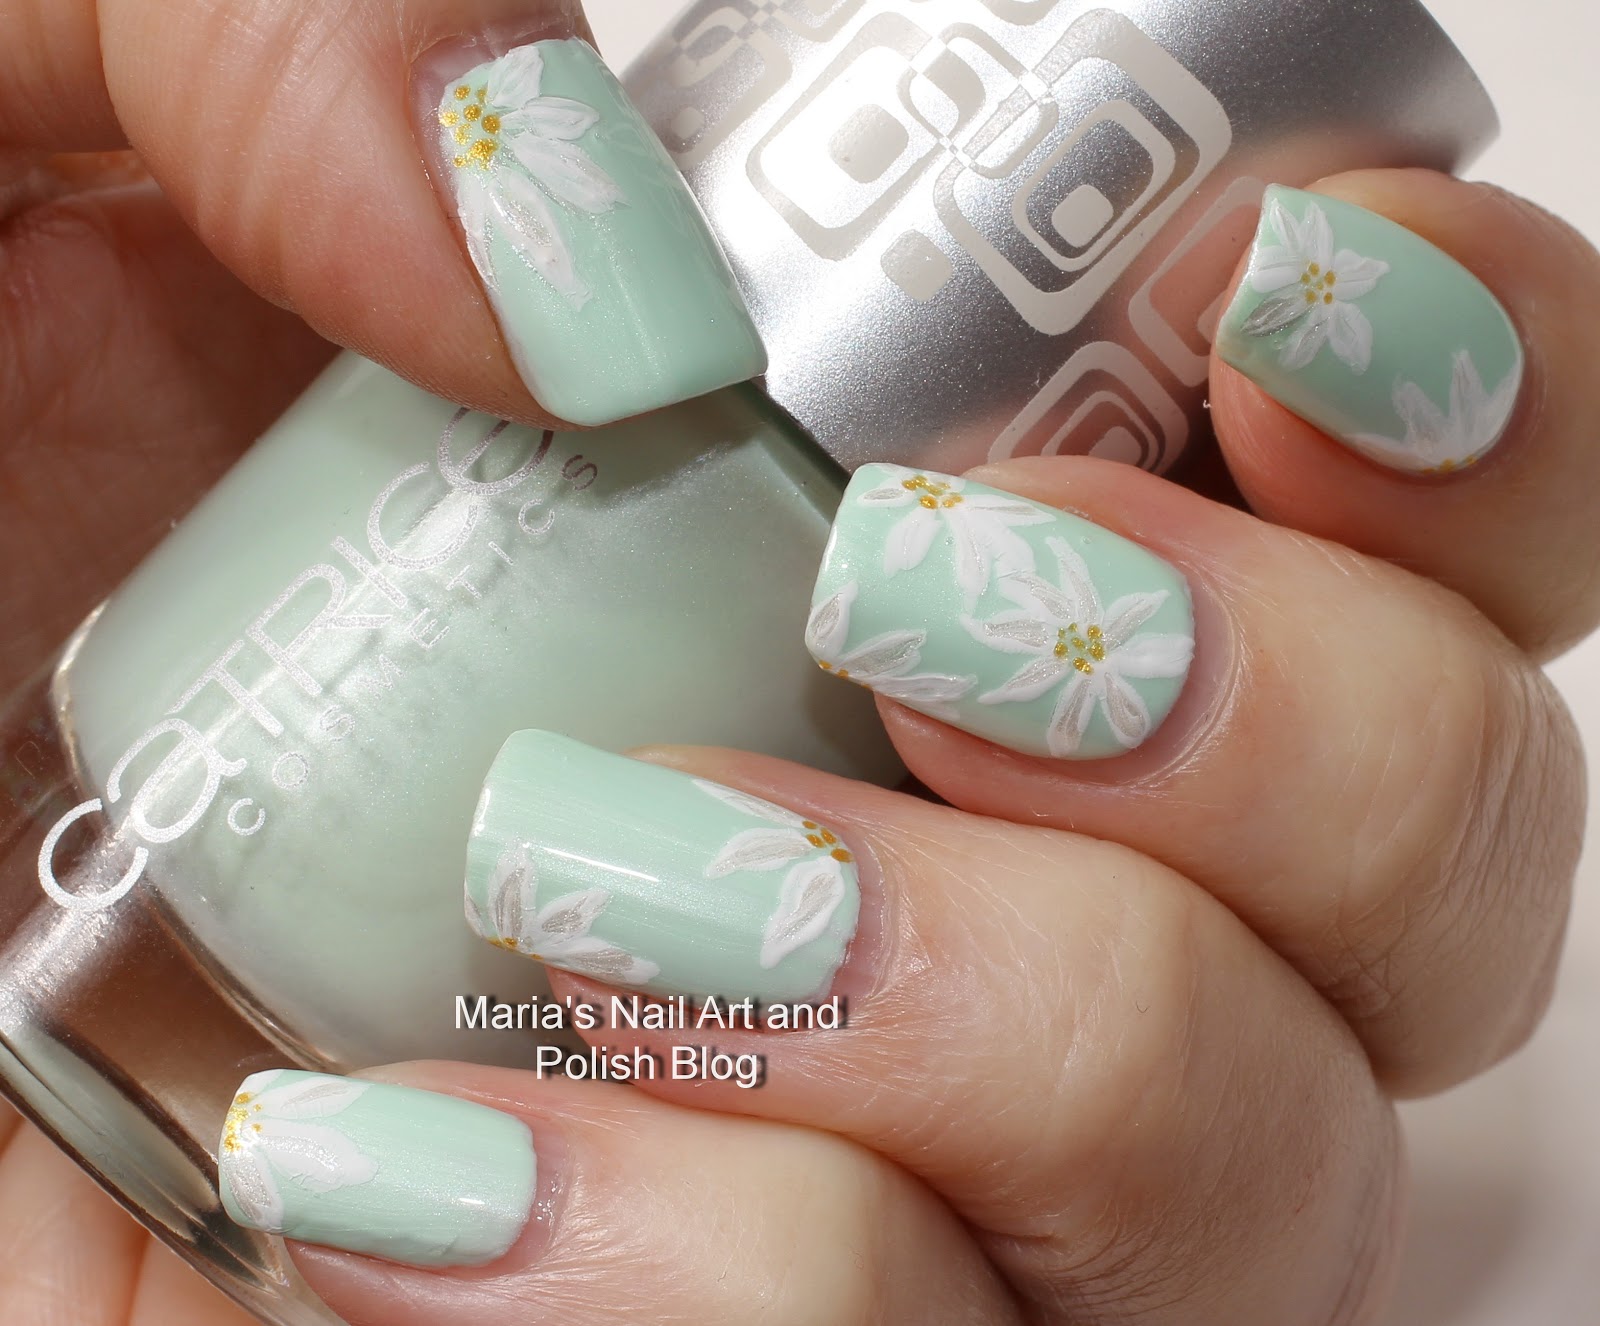 Marias Nail Art and Polish Blog: Subtle floral nail art on pastel mint